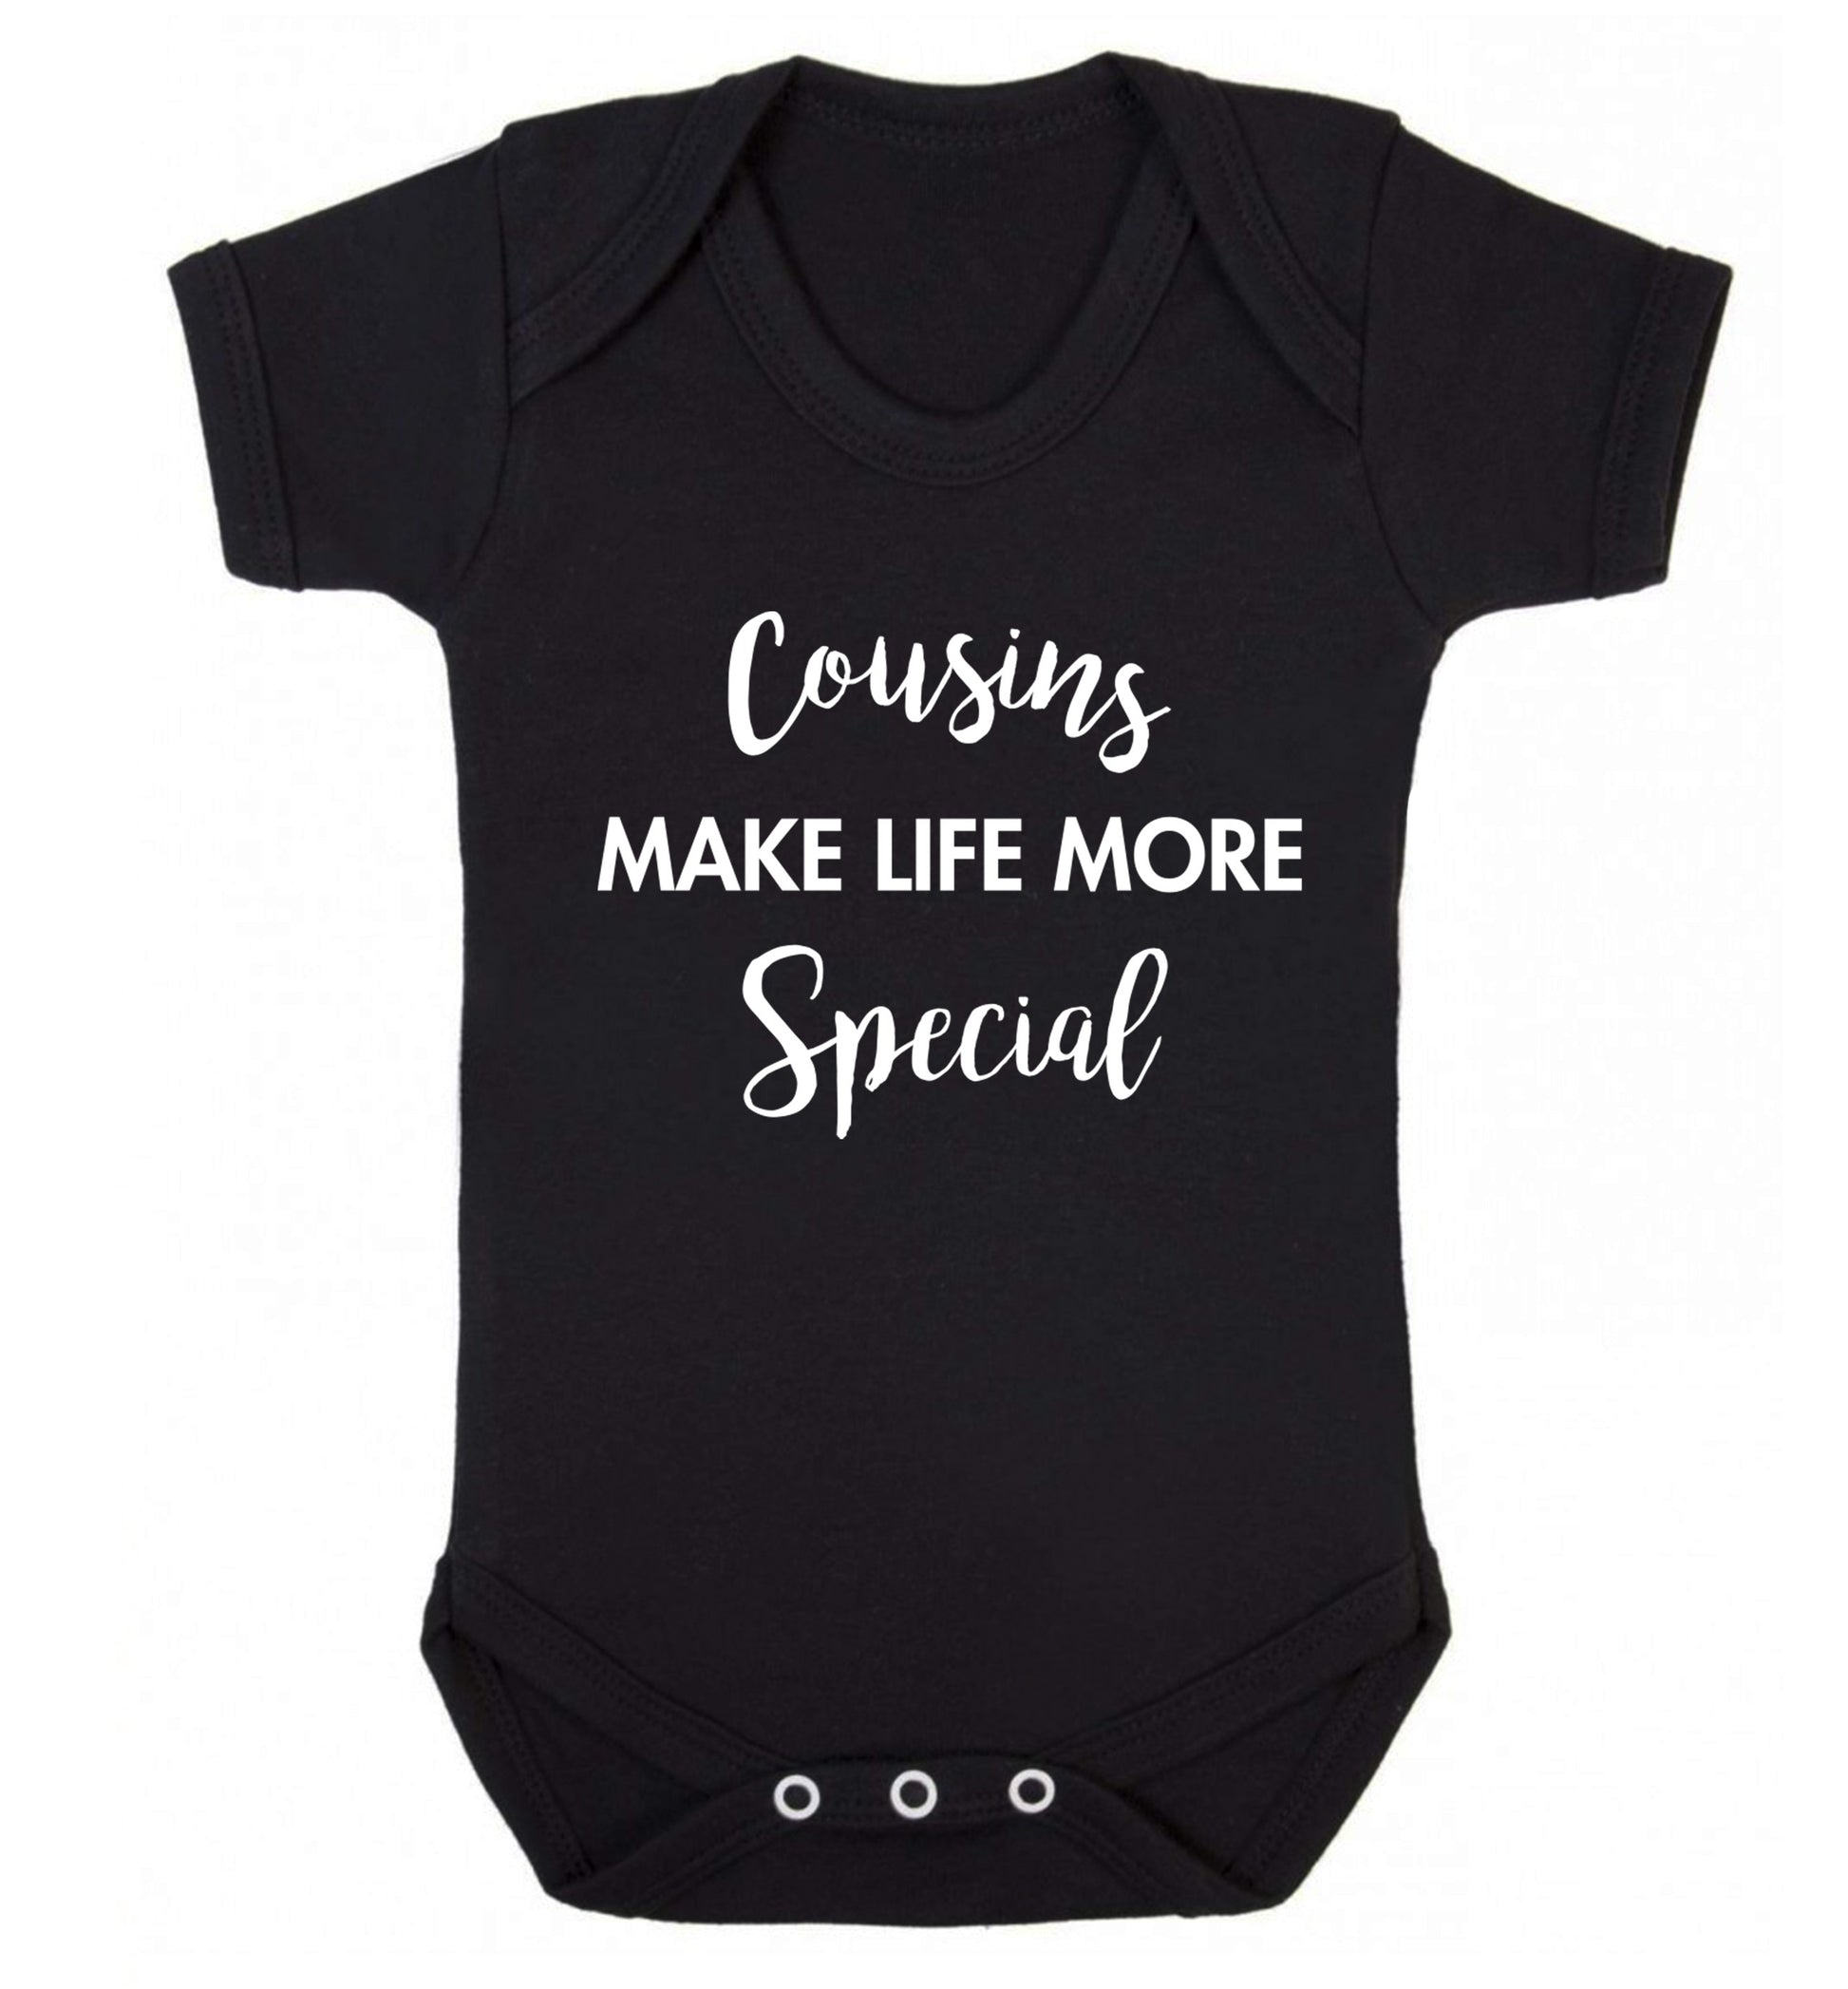 Cousins make life more special Baby Vest black 18-24 months